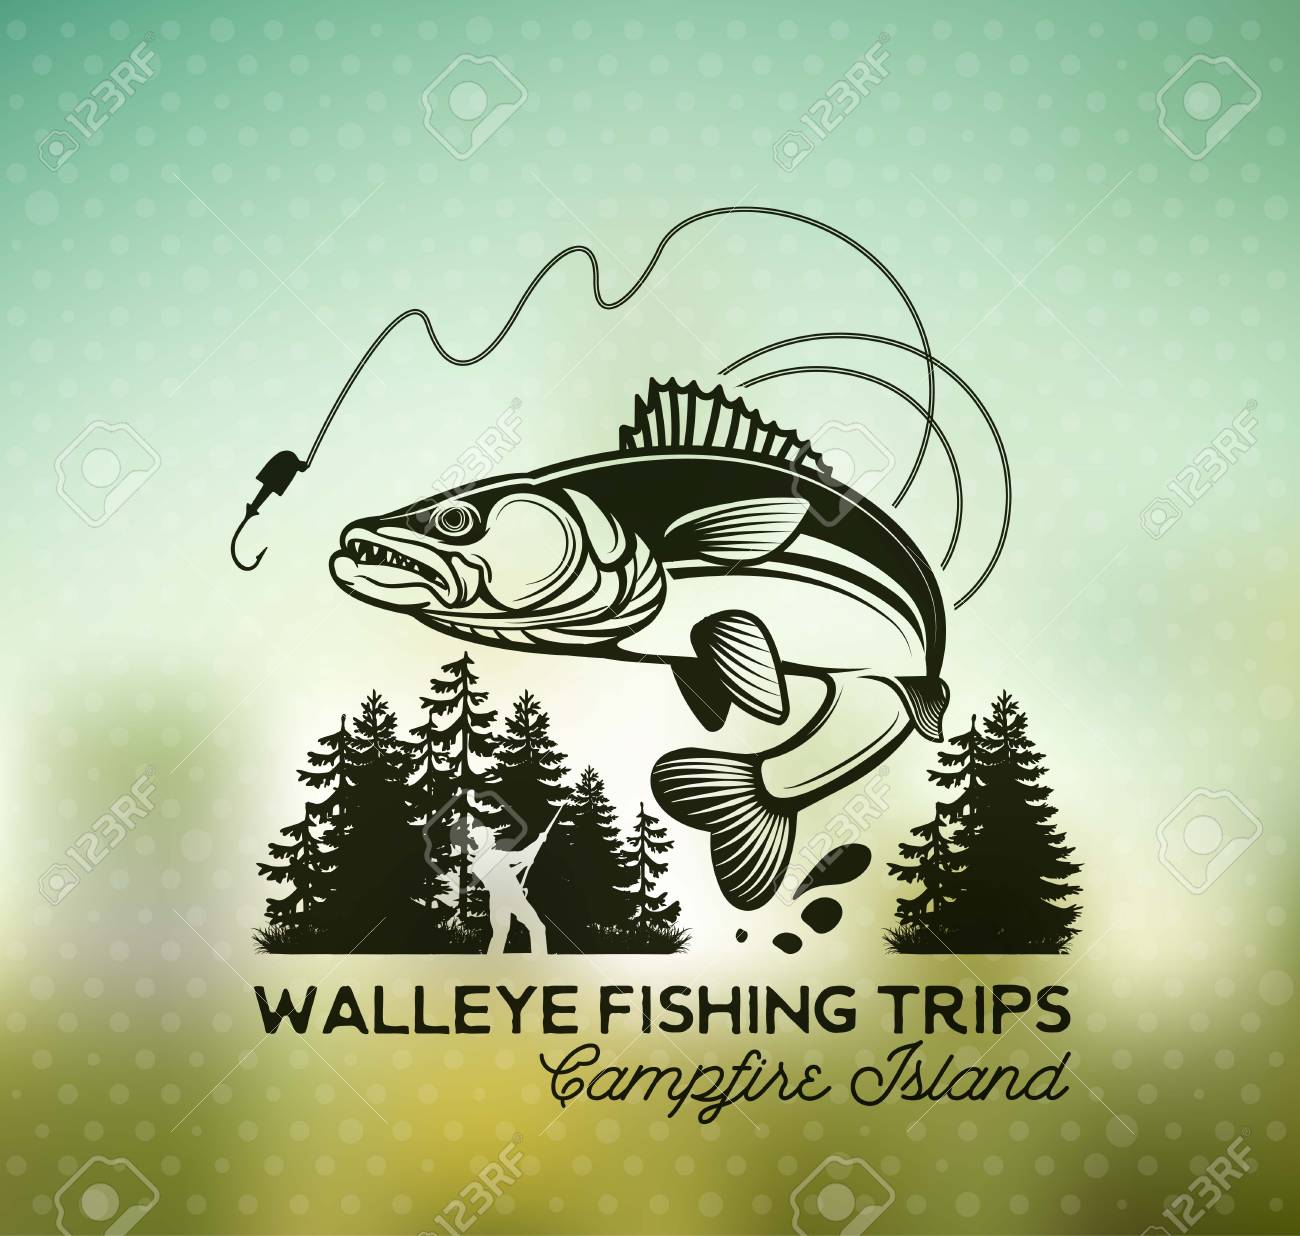 Vintage Walleye Fishing Emblems and Labels. Vector Illustration.